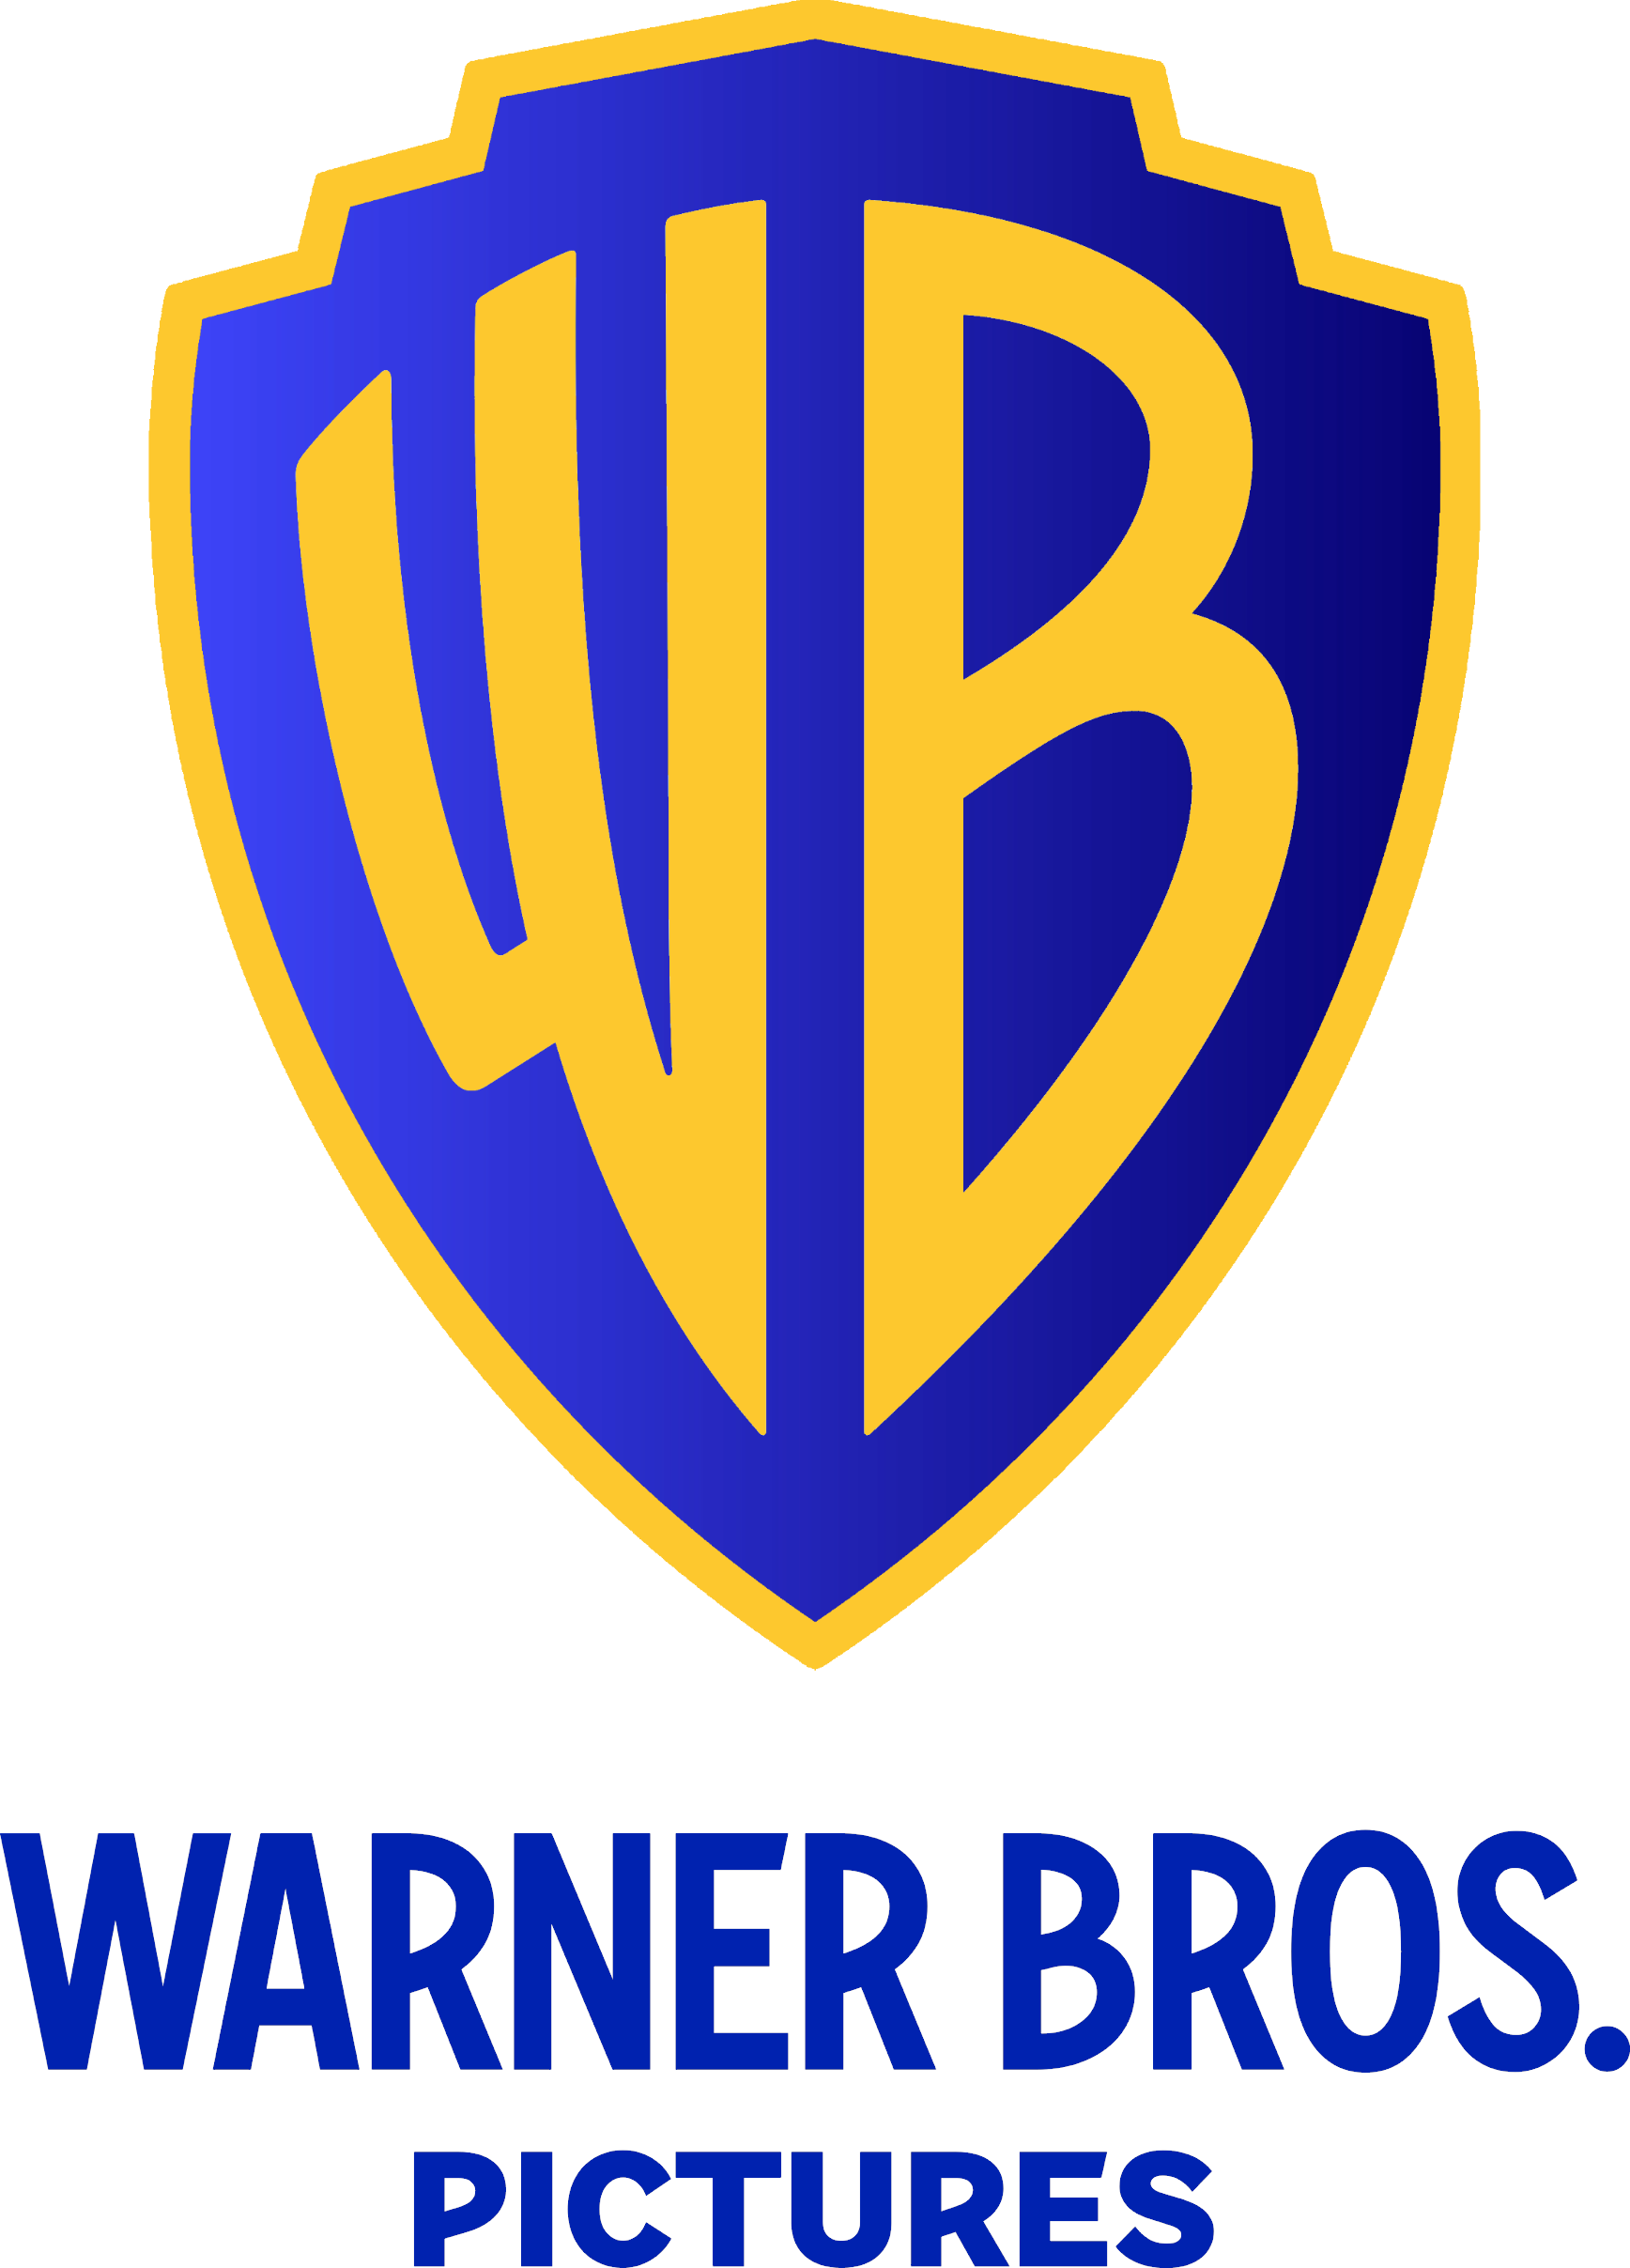 Warner Bros. Pictures 2023 logo (2019 version) by VictorPinas on DeviantArt